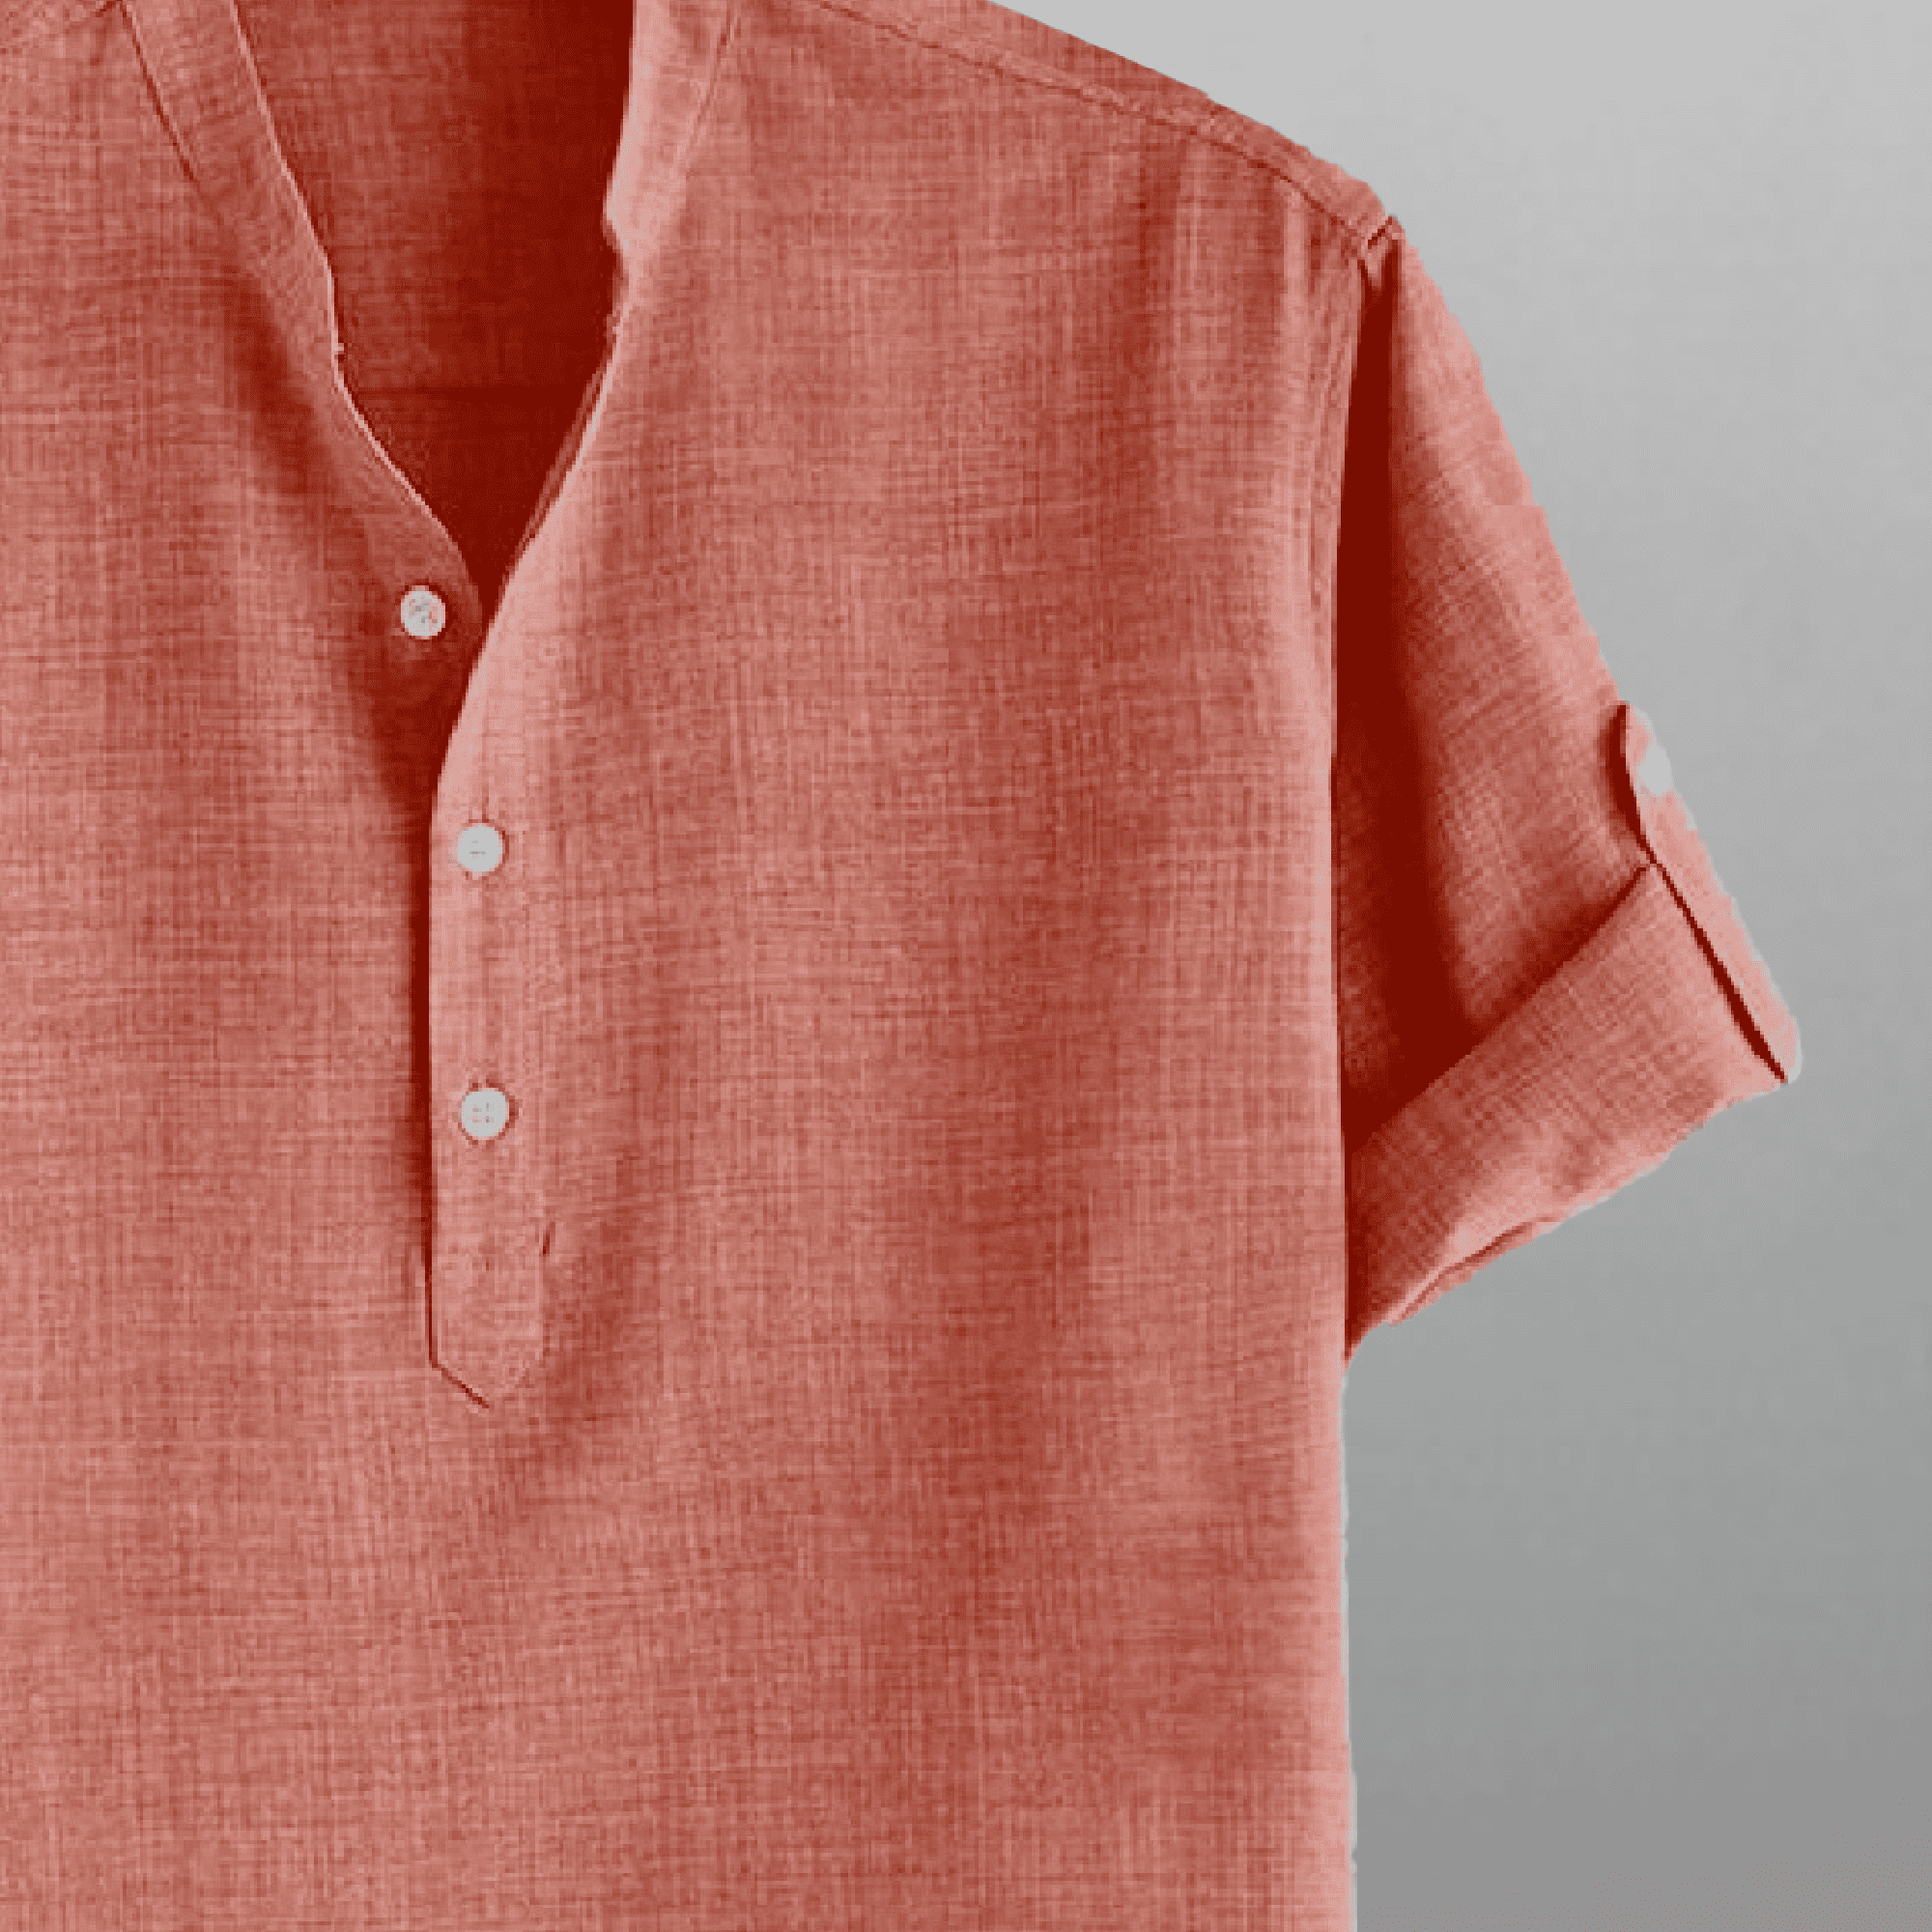 Men's Grapefruit Red T-shirt style Khadi shirt-RMS030